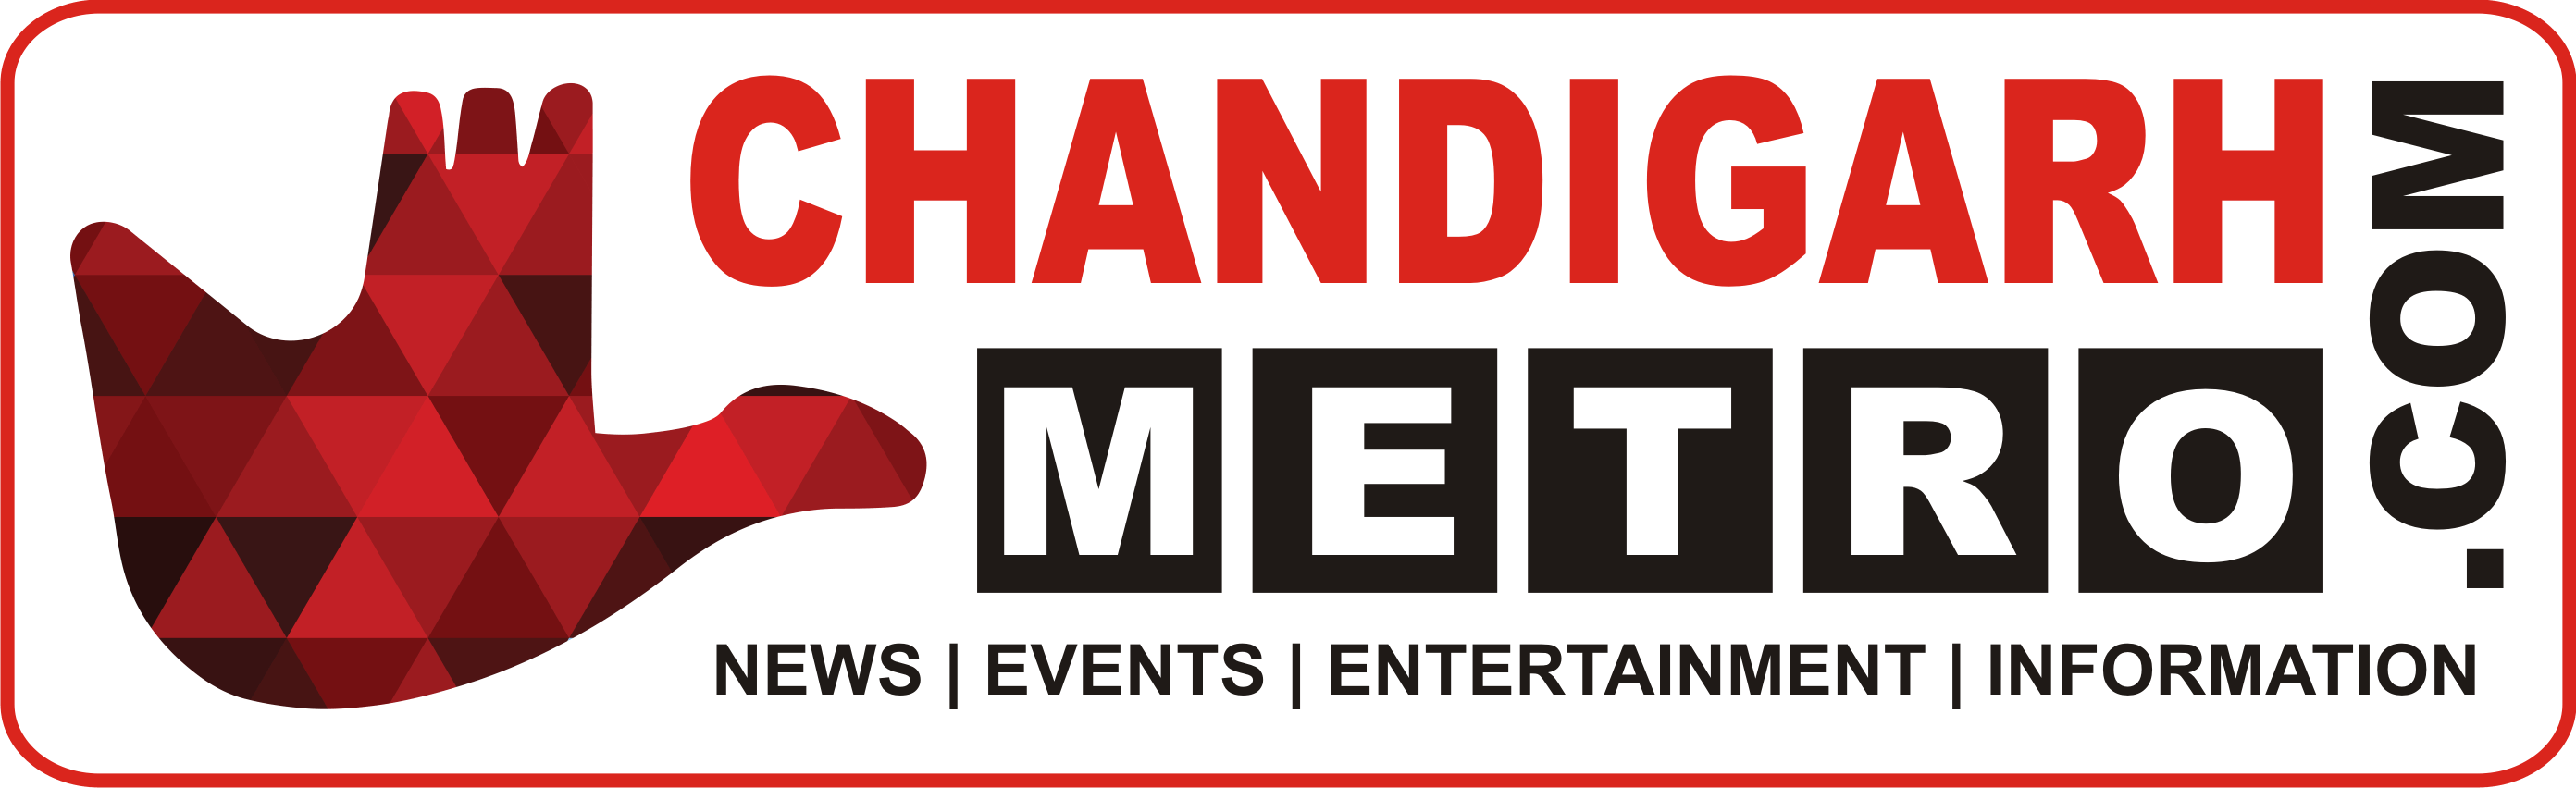 chandigarh metro (news, events, entertainment & information)